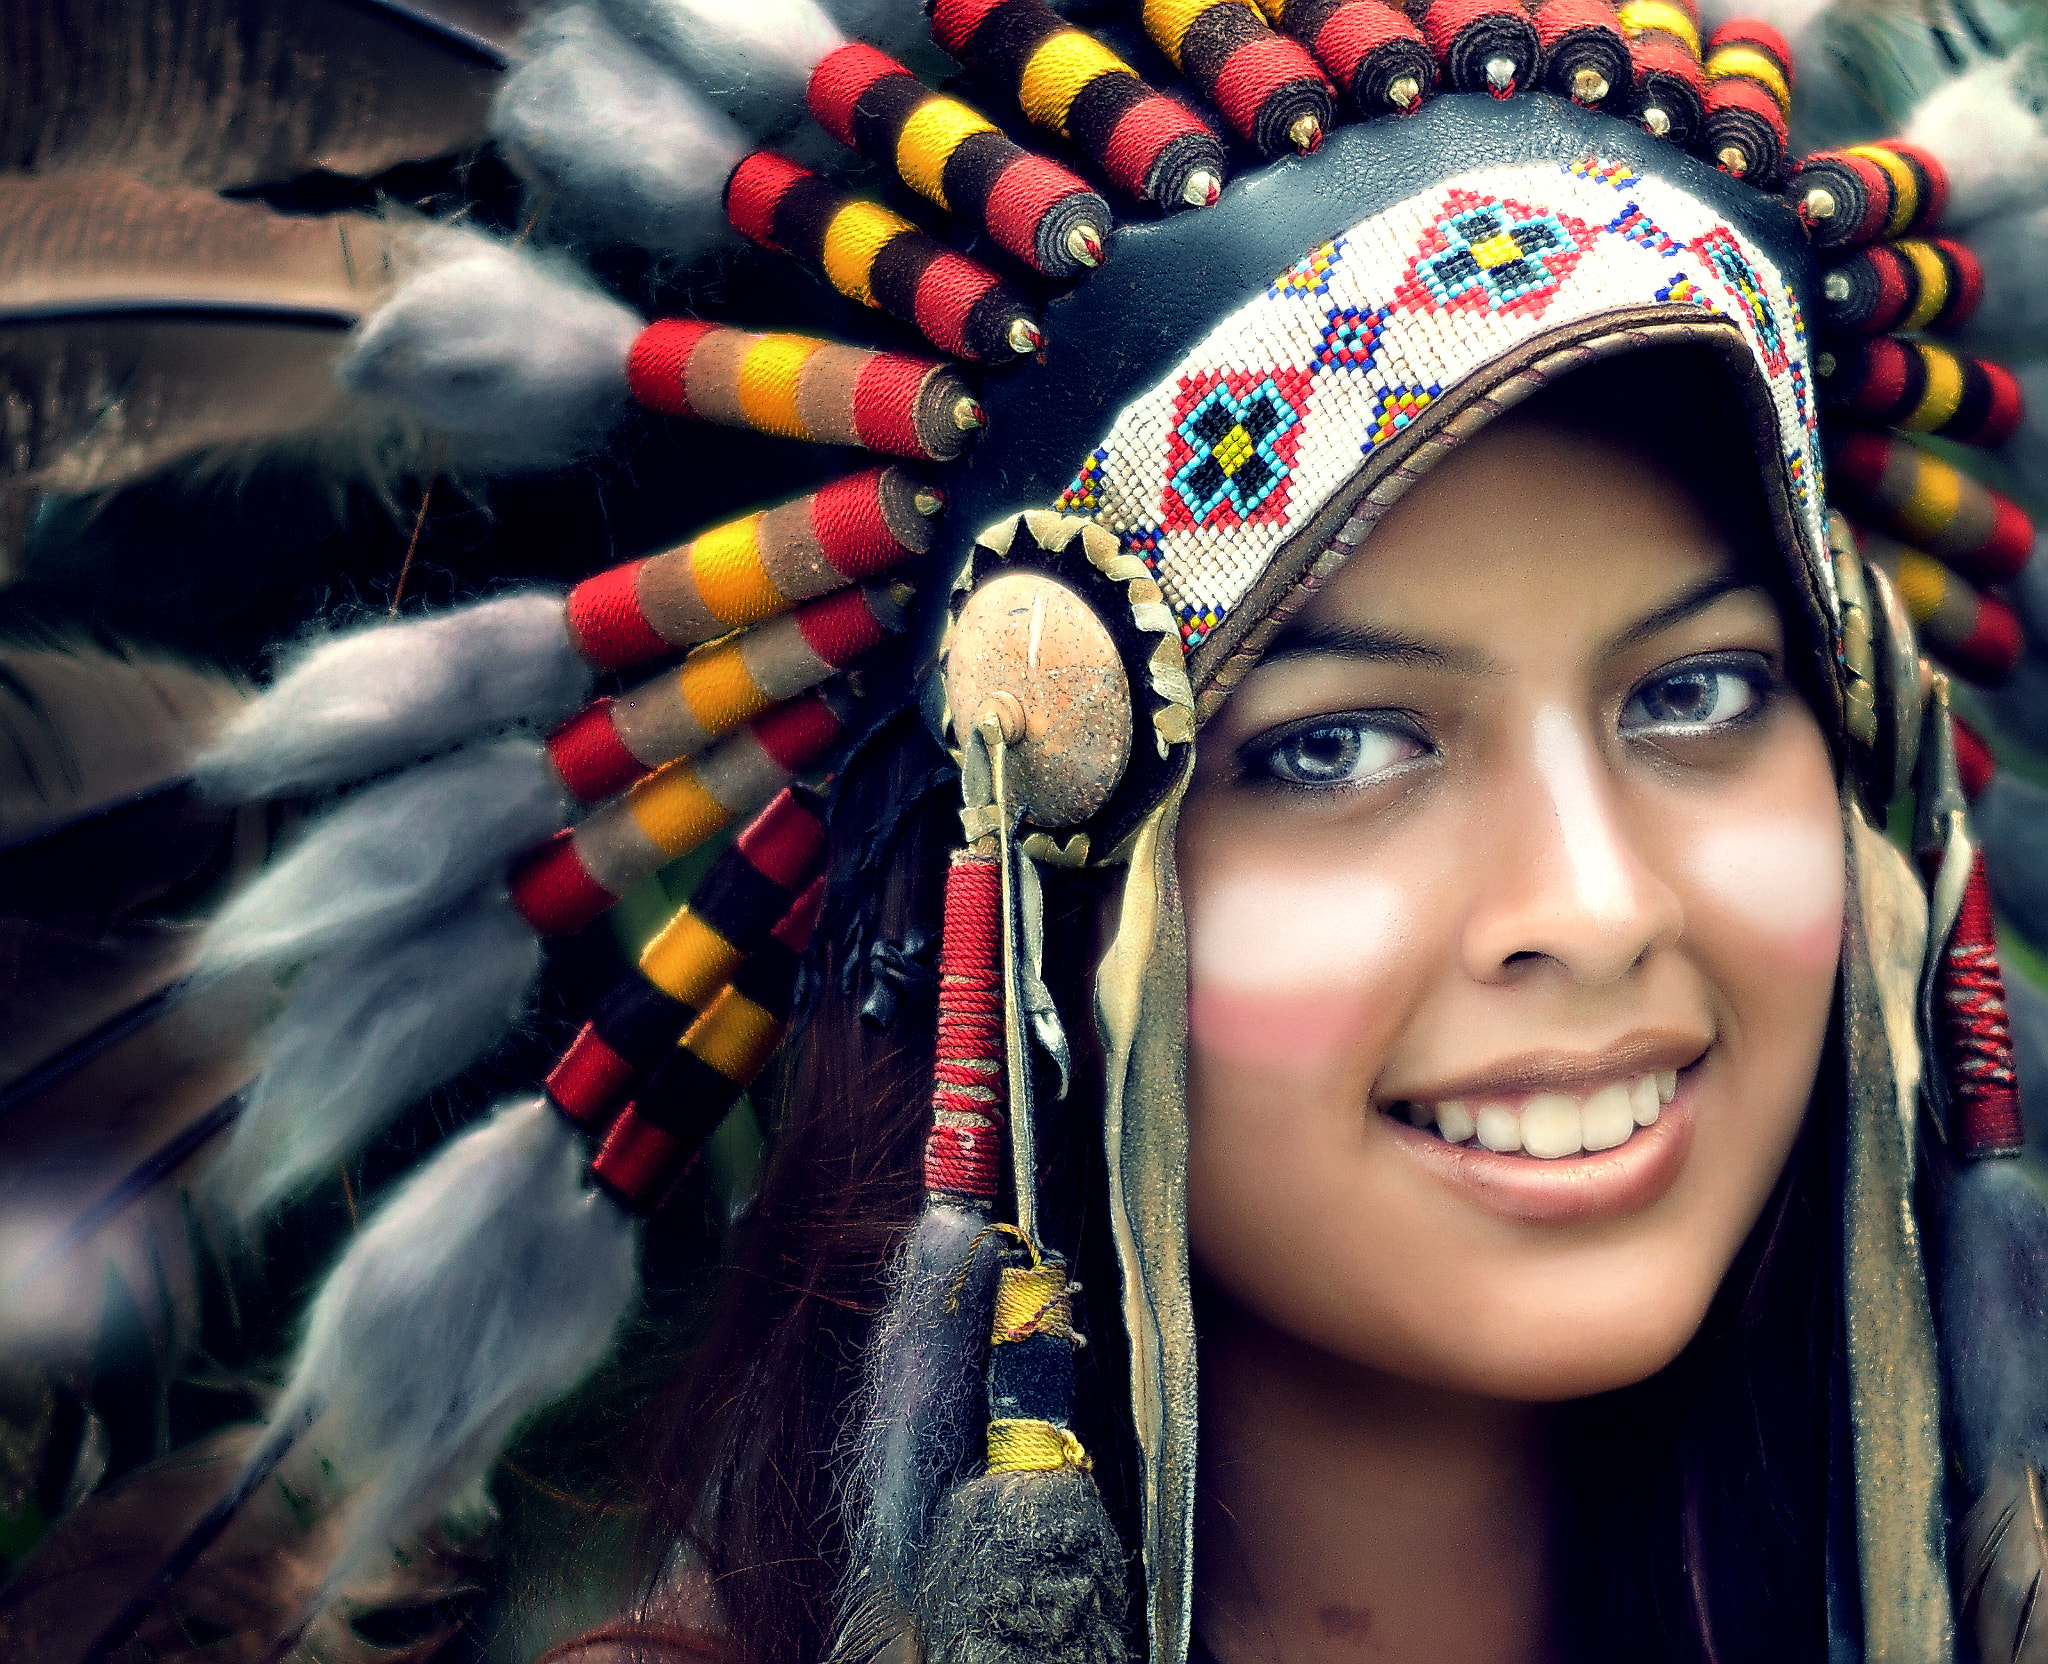 Portrait of apache girl by Amir Rodof / 500px